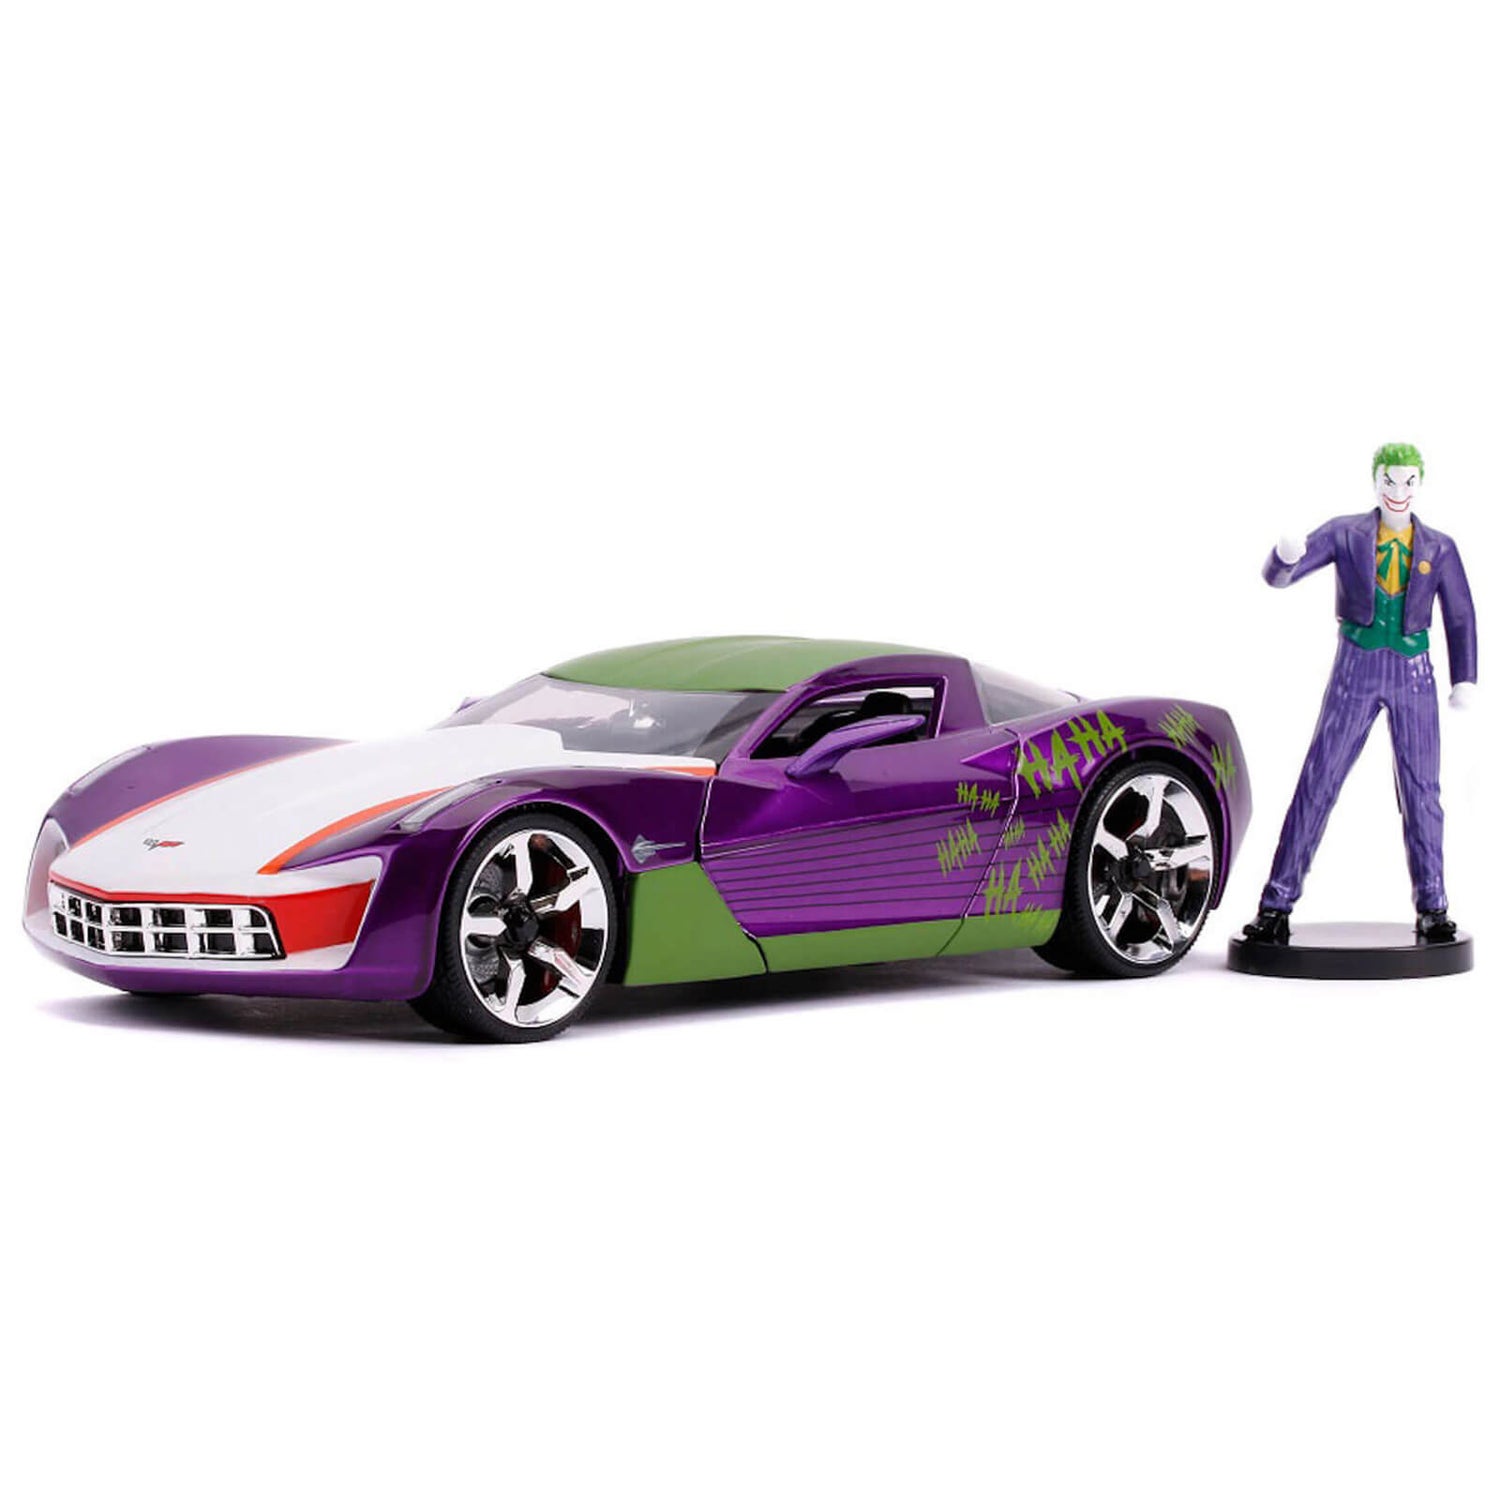 Jada Druckguss-Figur im Maßstab 1:24 2009 Corvette Stingray Koncept mit Joker Figur